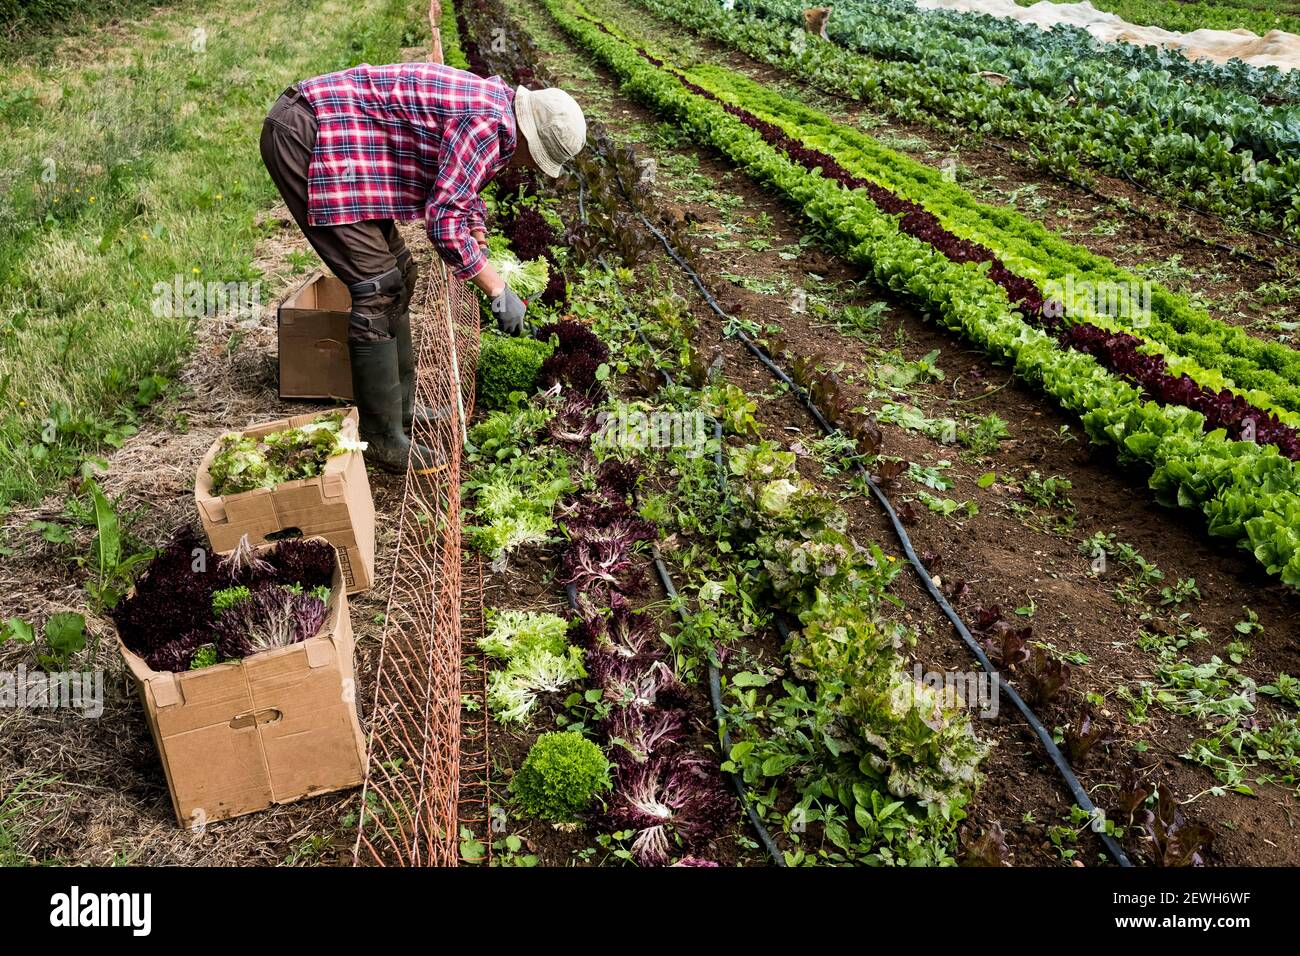 Man harvesting salad leaves on a farm. Stock Photo